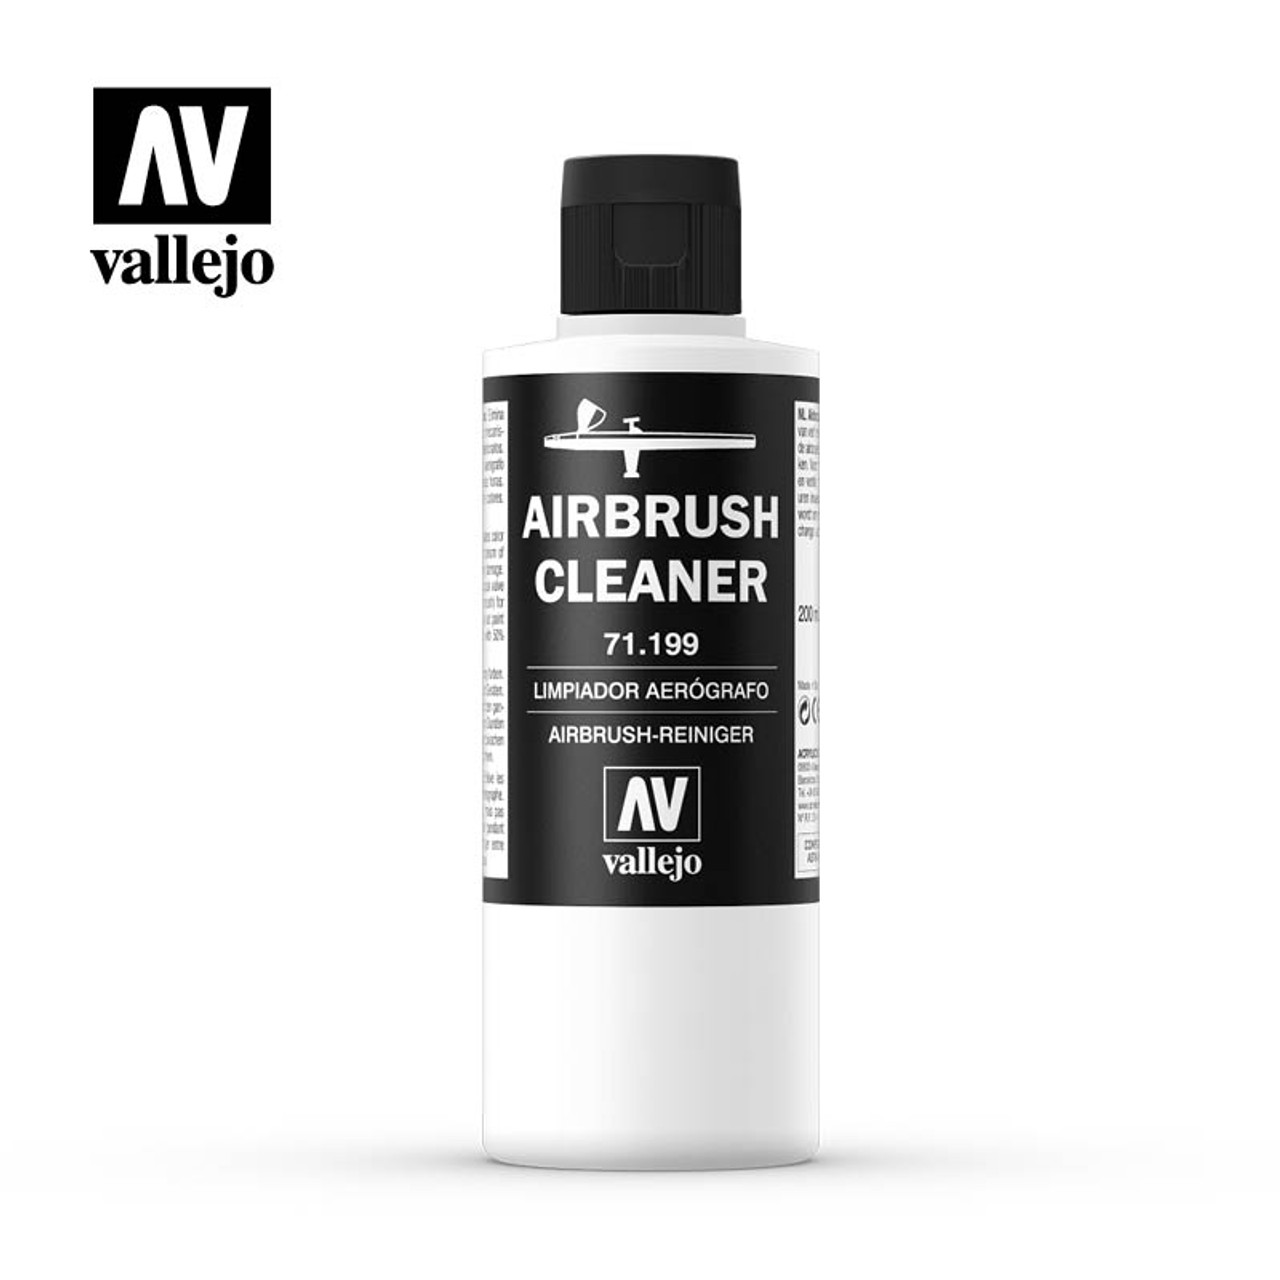 Airbrush Cleaner – TTCombat